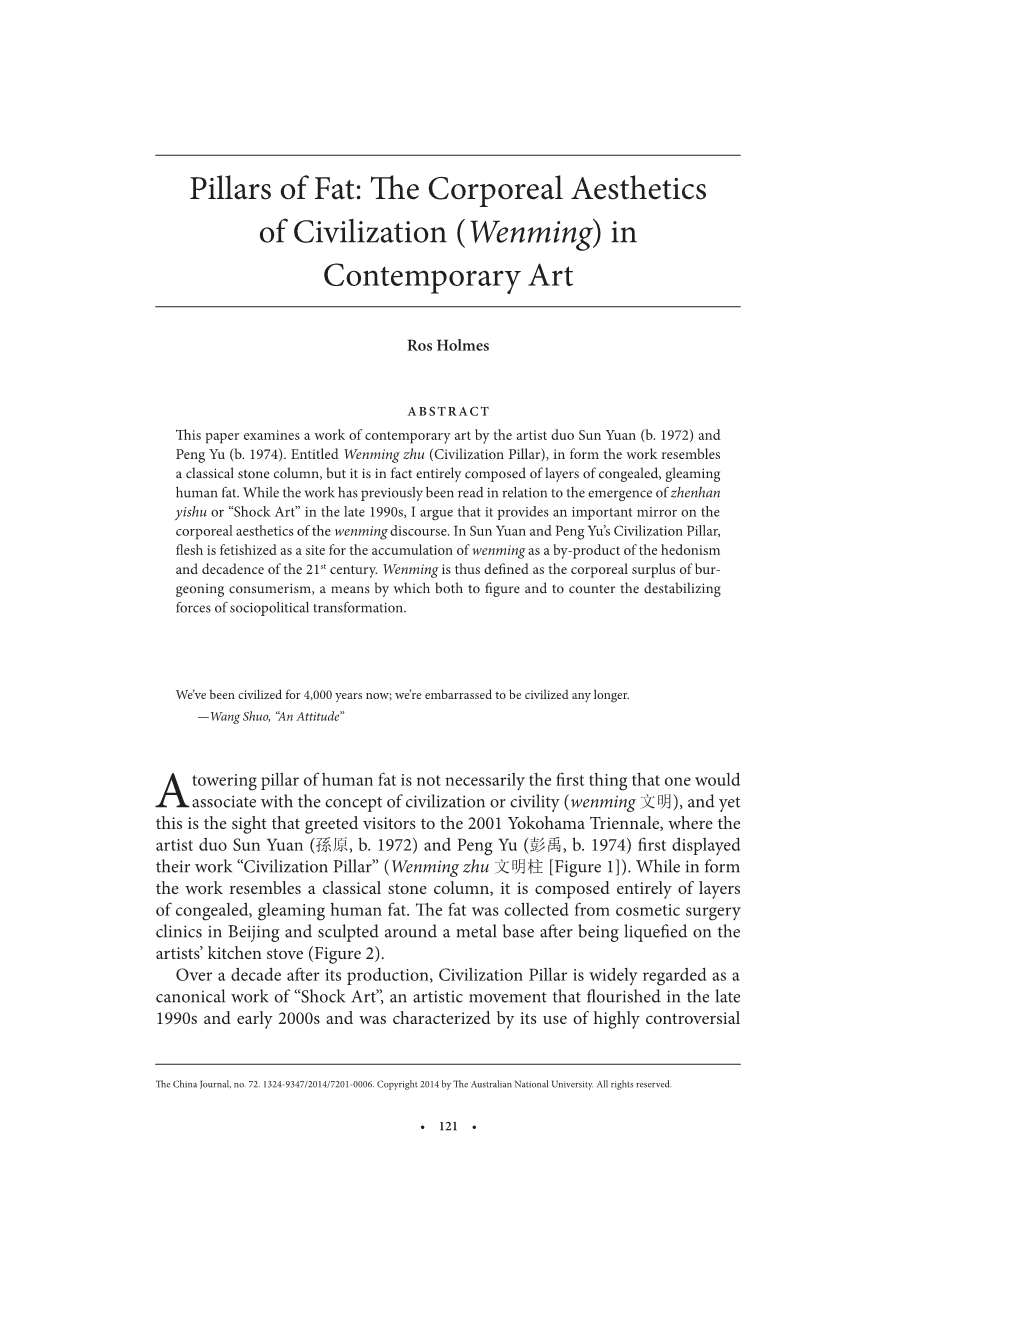 Pillars of Fat: the Corporeal Aesthetics of Civilization (Wenming)